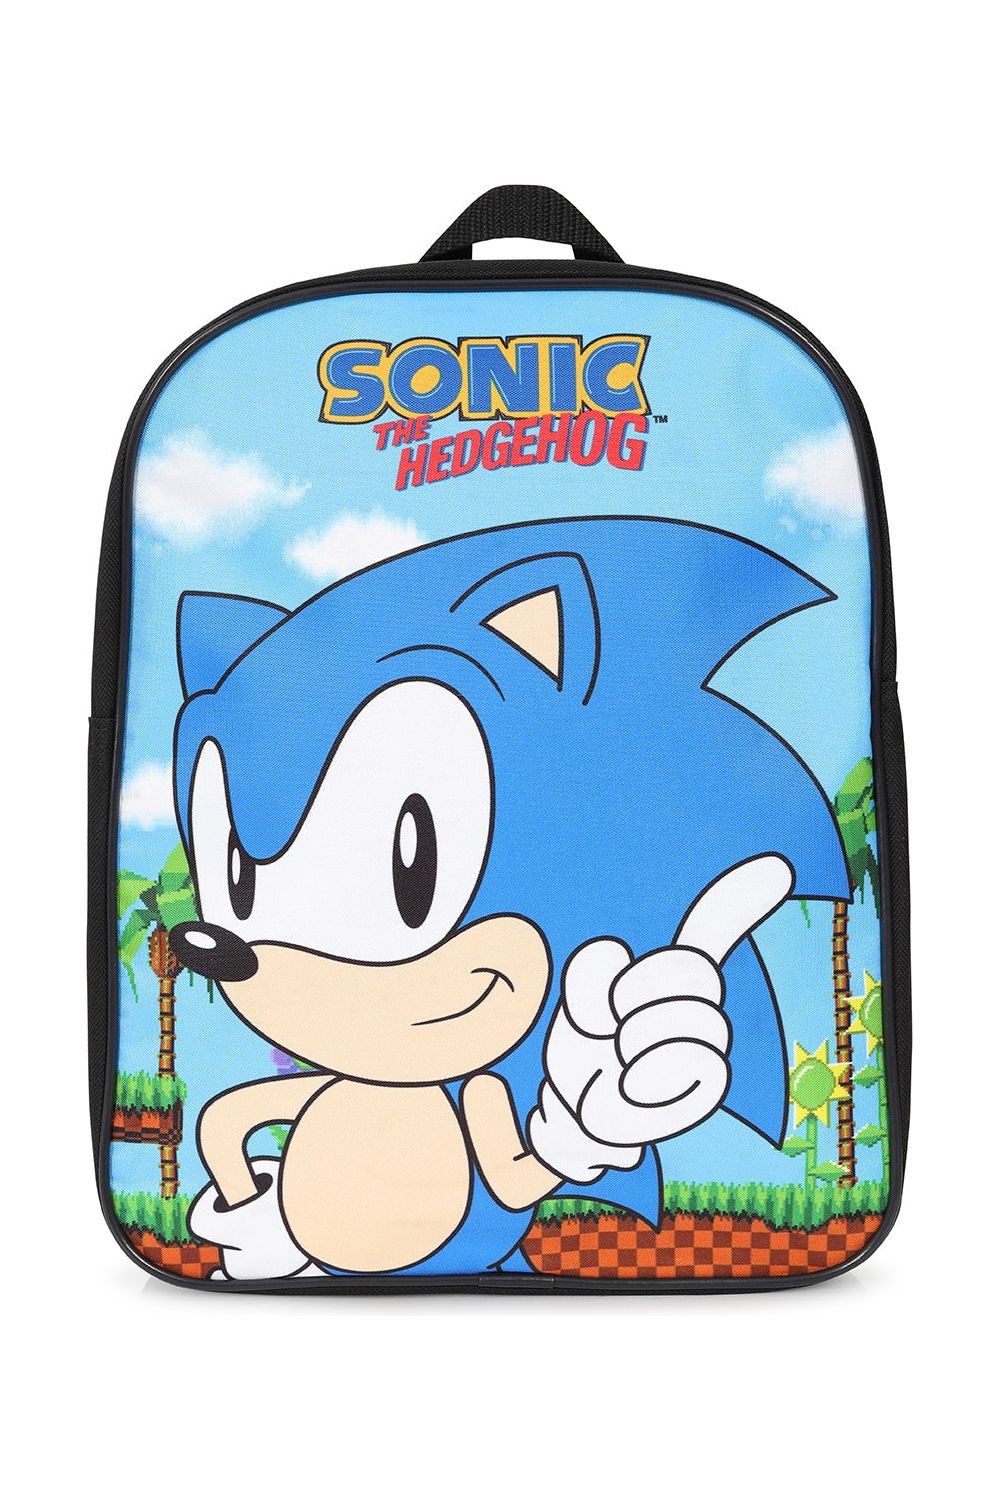 Official Sonic The Hedgehog Retro Kids Backpack Rucksack School Bag